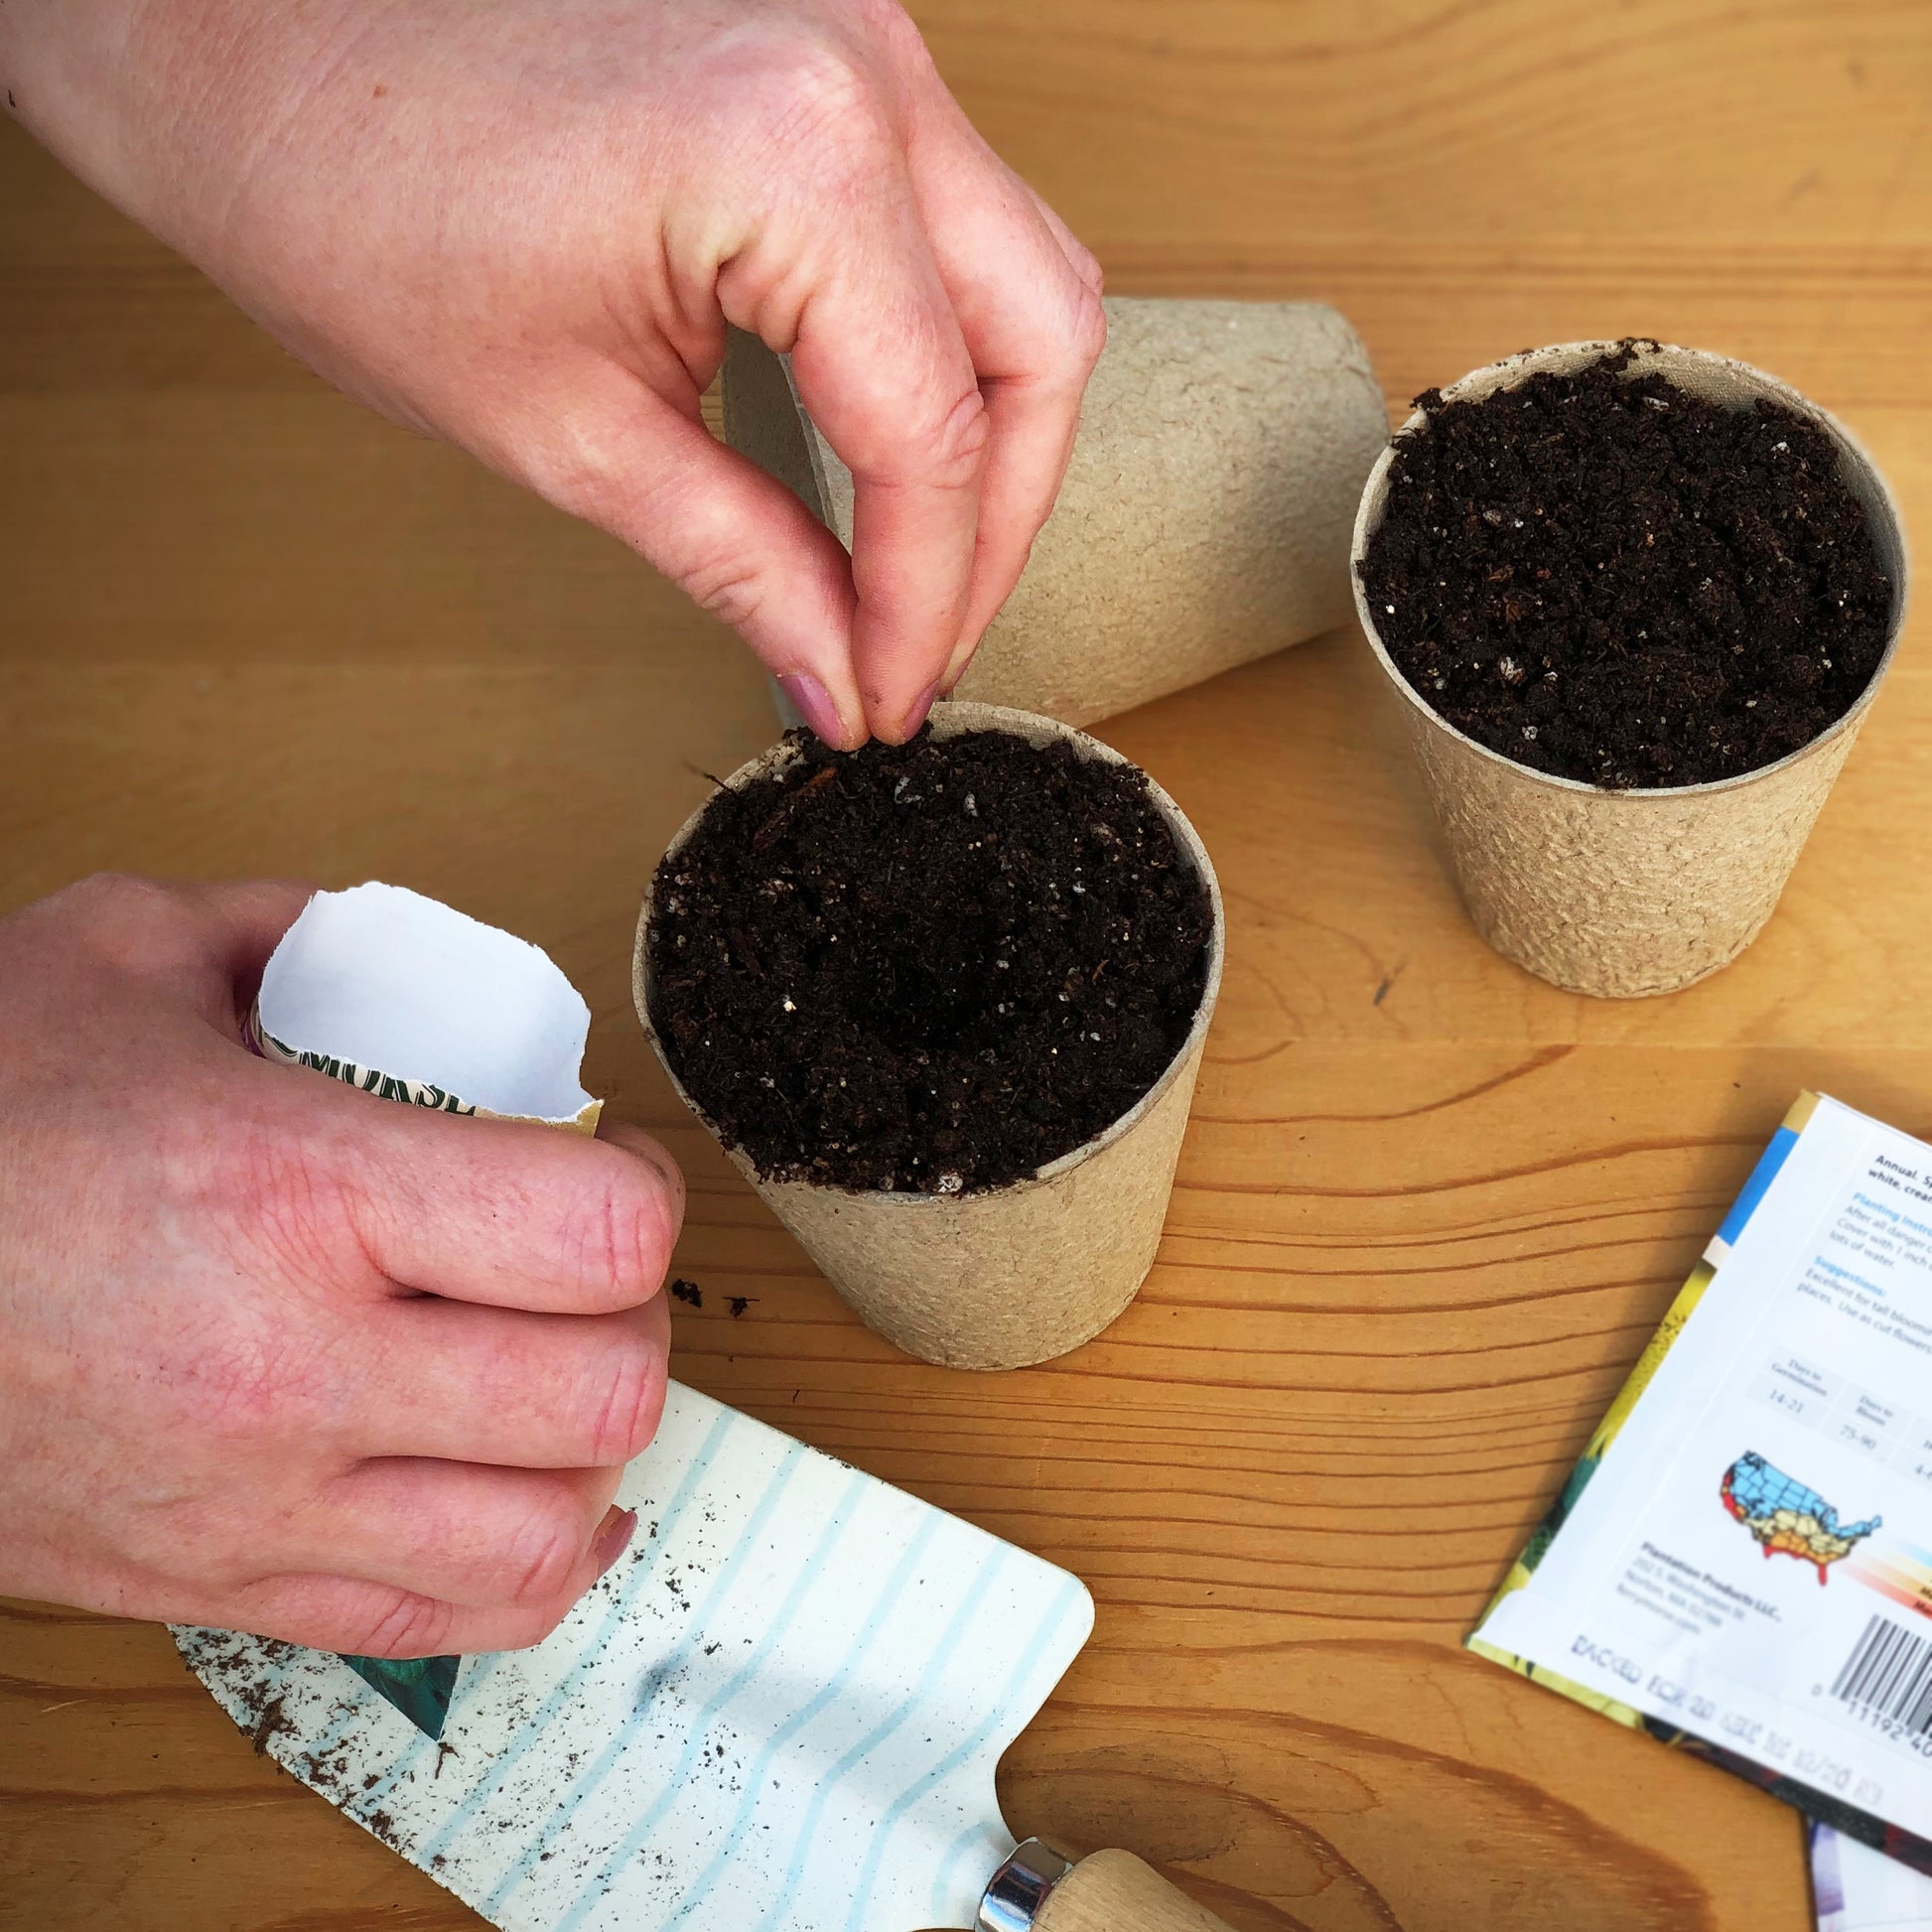 Start Garden Leader Monster Cabbage seeds in Jiffy peat pots.